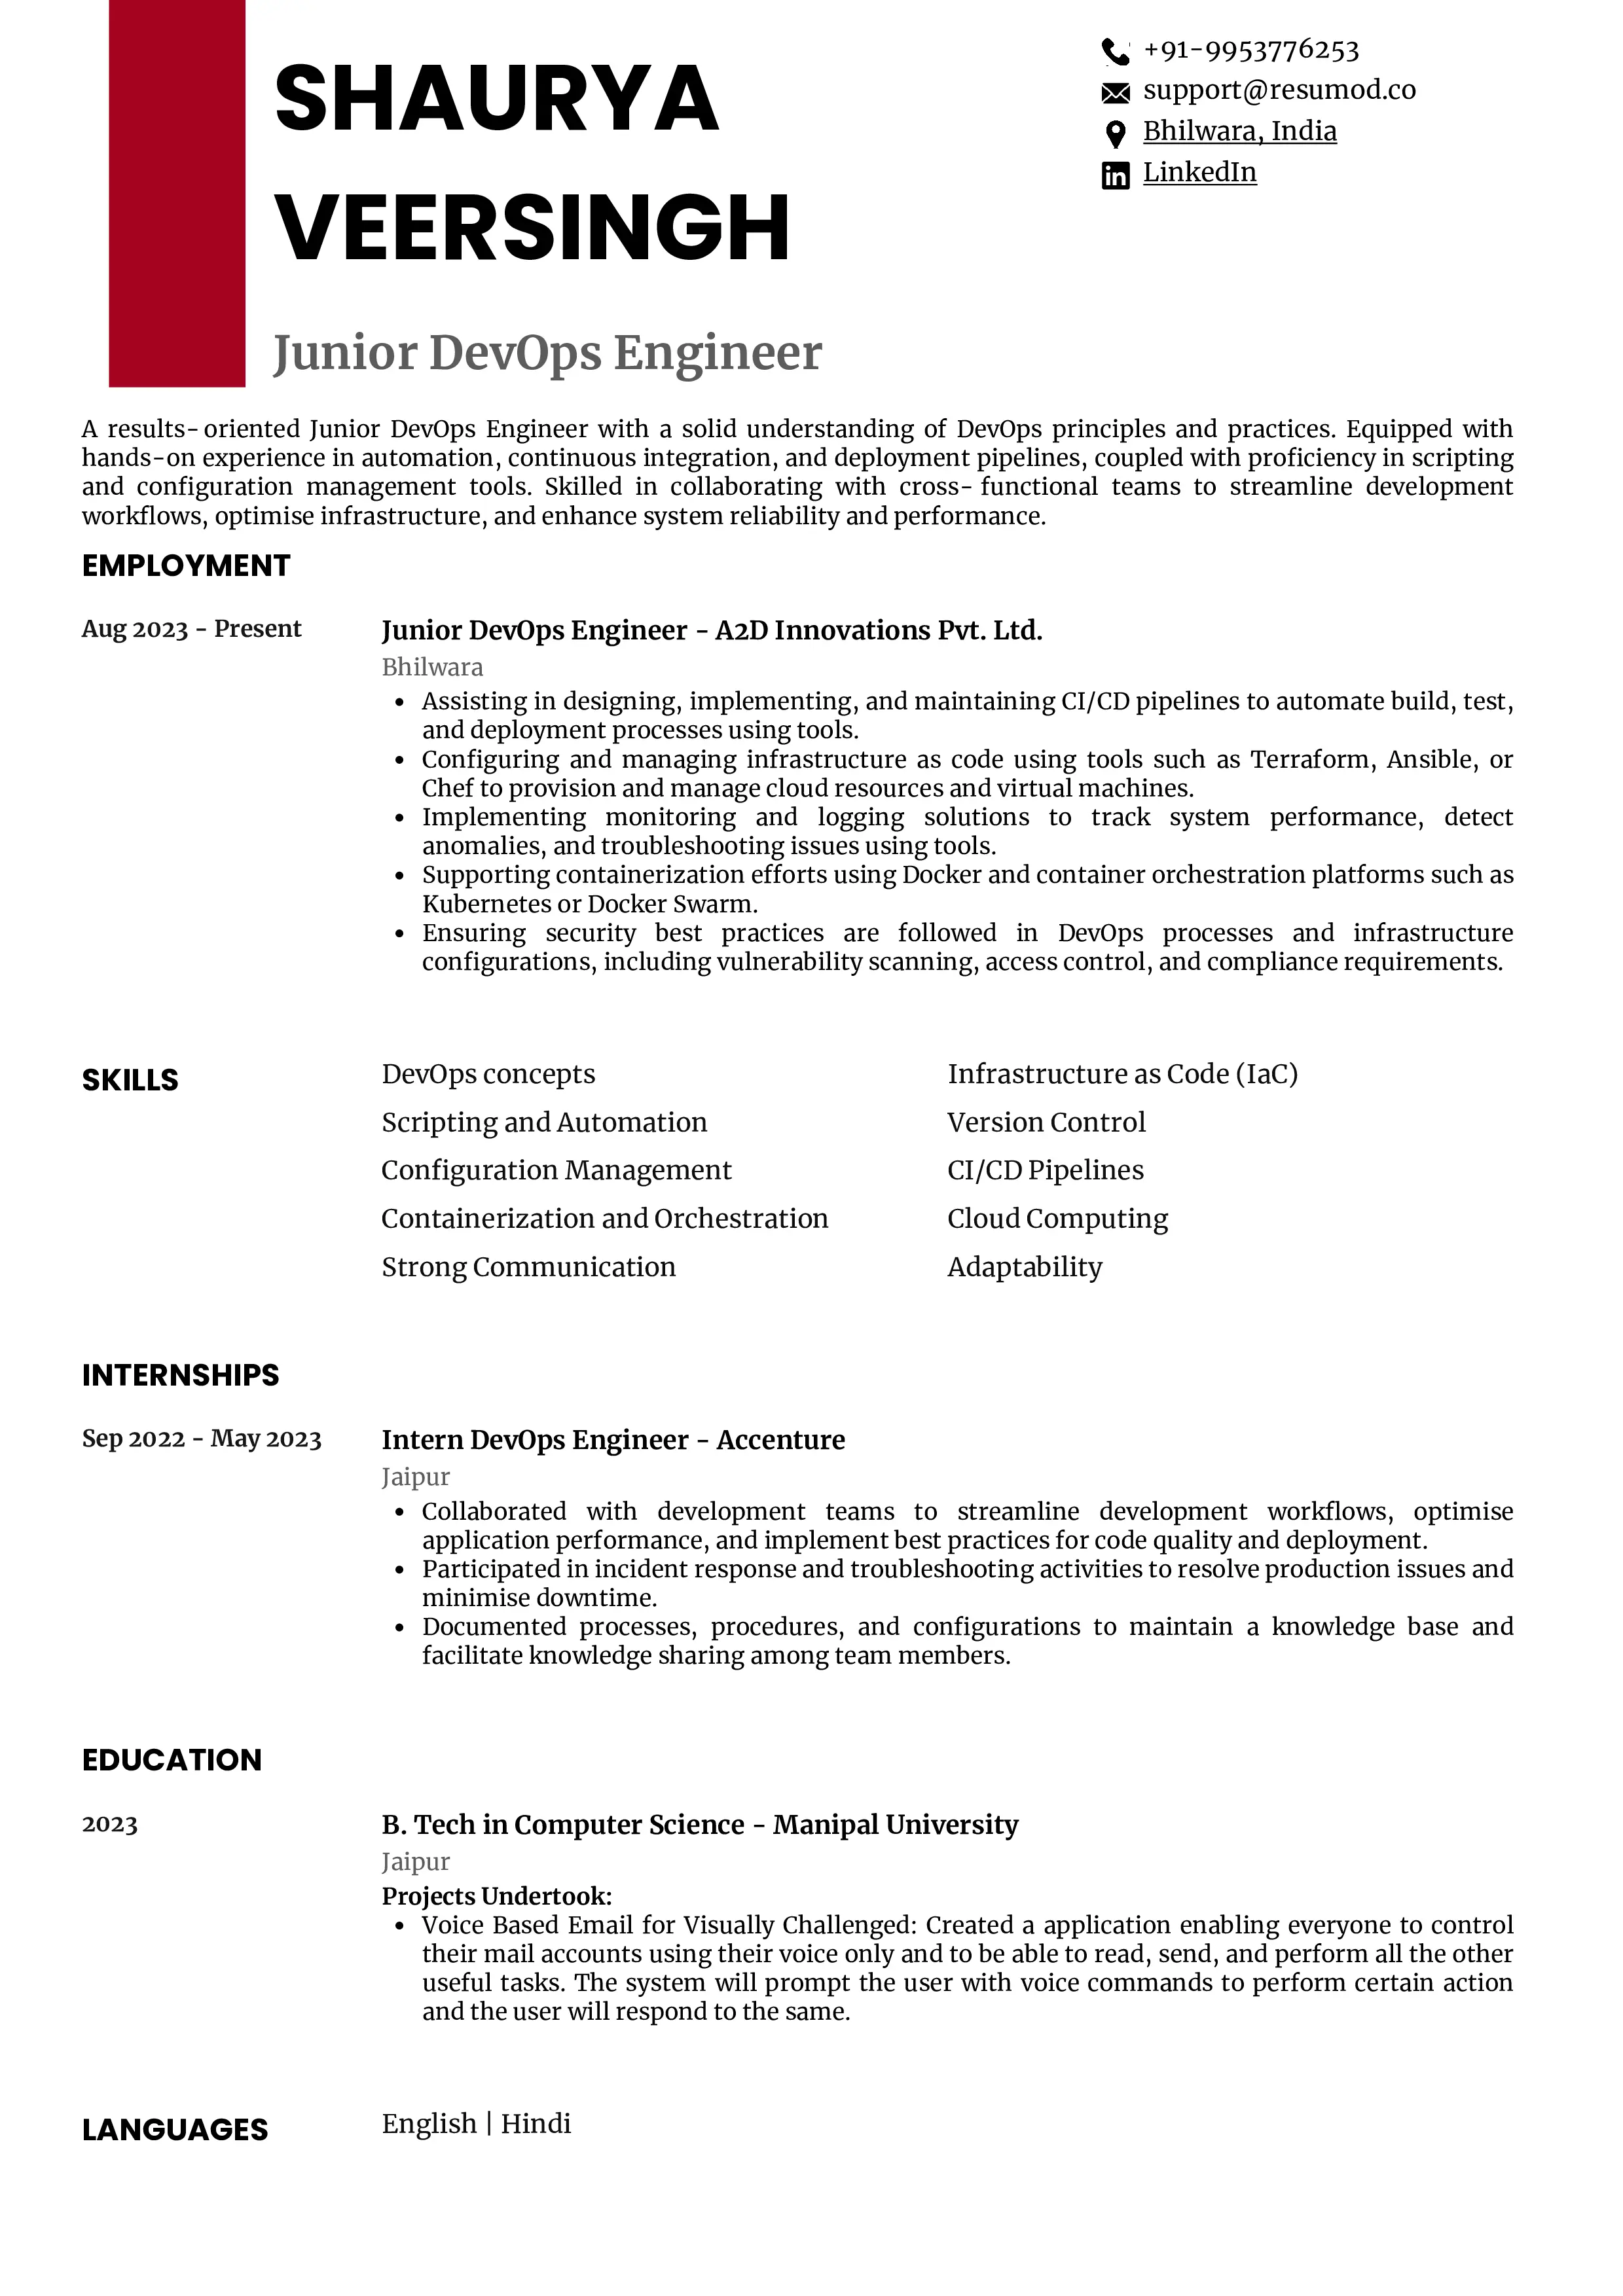 Sample Resume of Junior DevOps Engineer | Free Resume Templates & Samples on Resumod.co